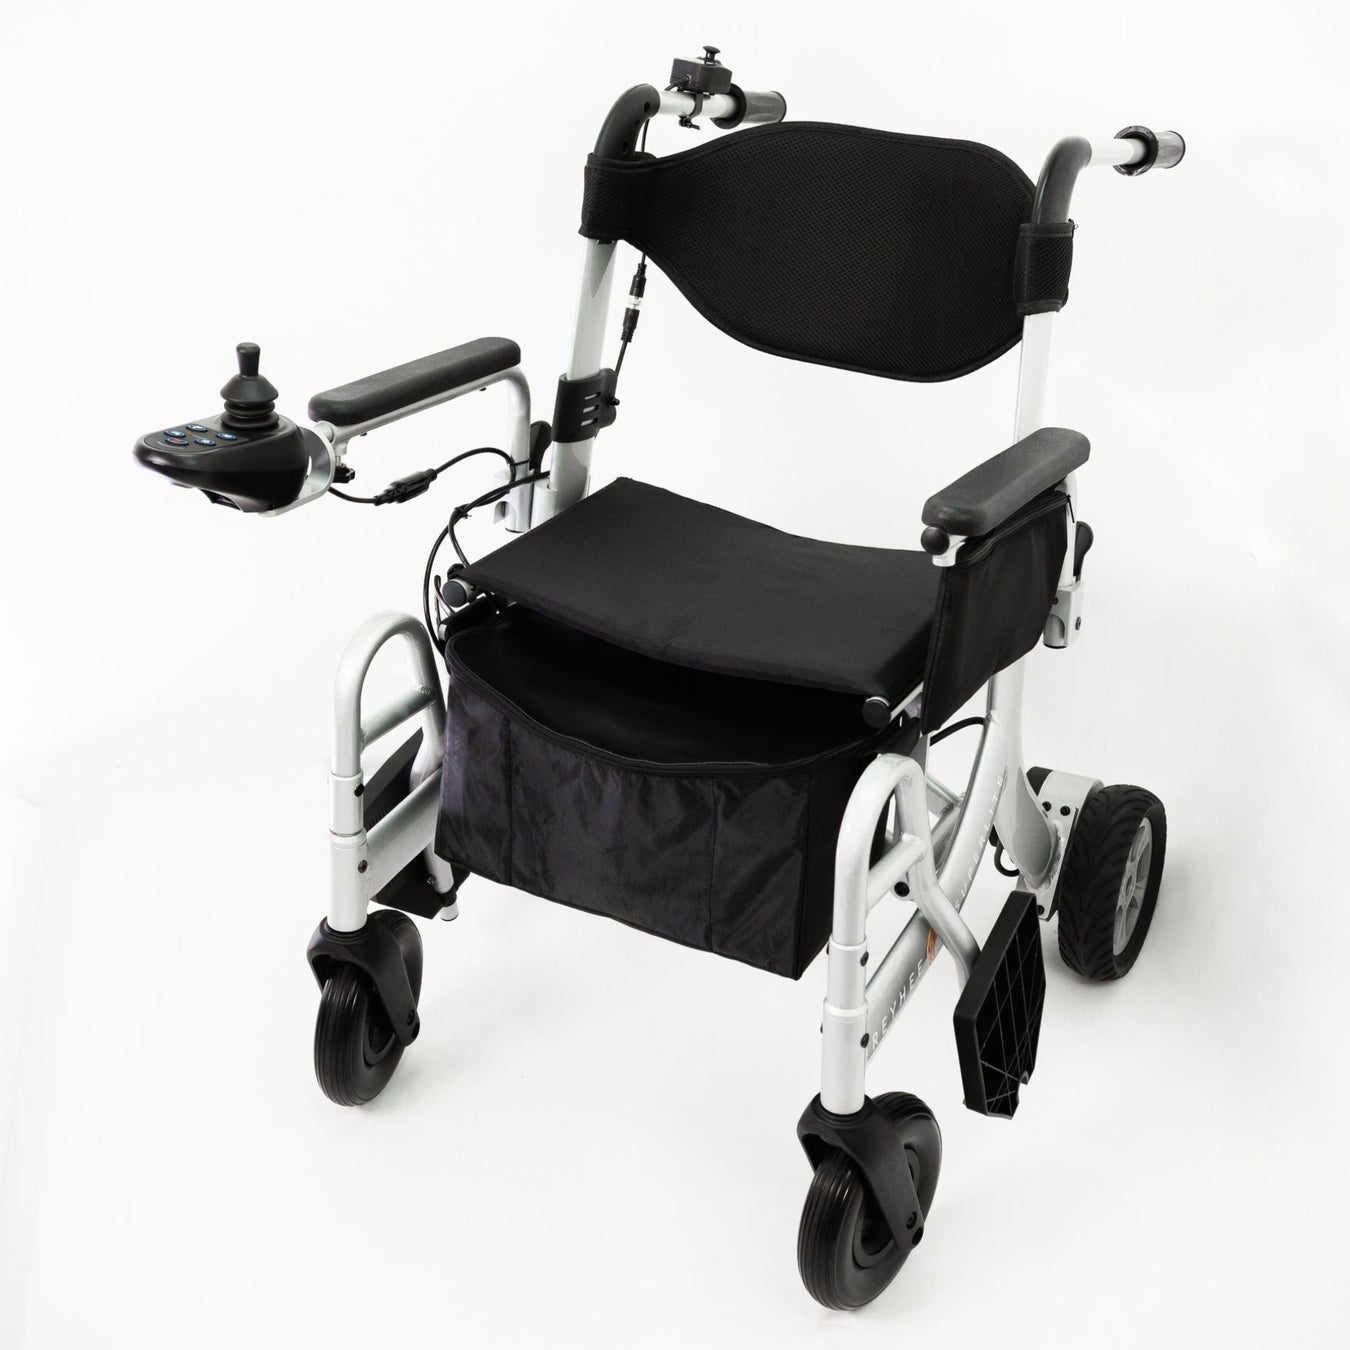 REYHEE SUPERLITE Folding 3-in-1 Electric Wheelchair, SUPERLITE Folding 3-in-1 Electric Wheelchair, Folding 3-in-1 Electric Wheelchair, 3-in-1 Electric Wheelchair